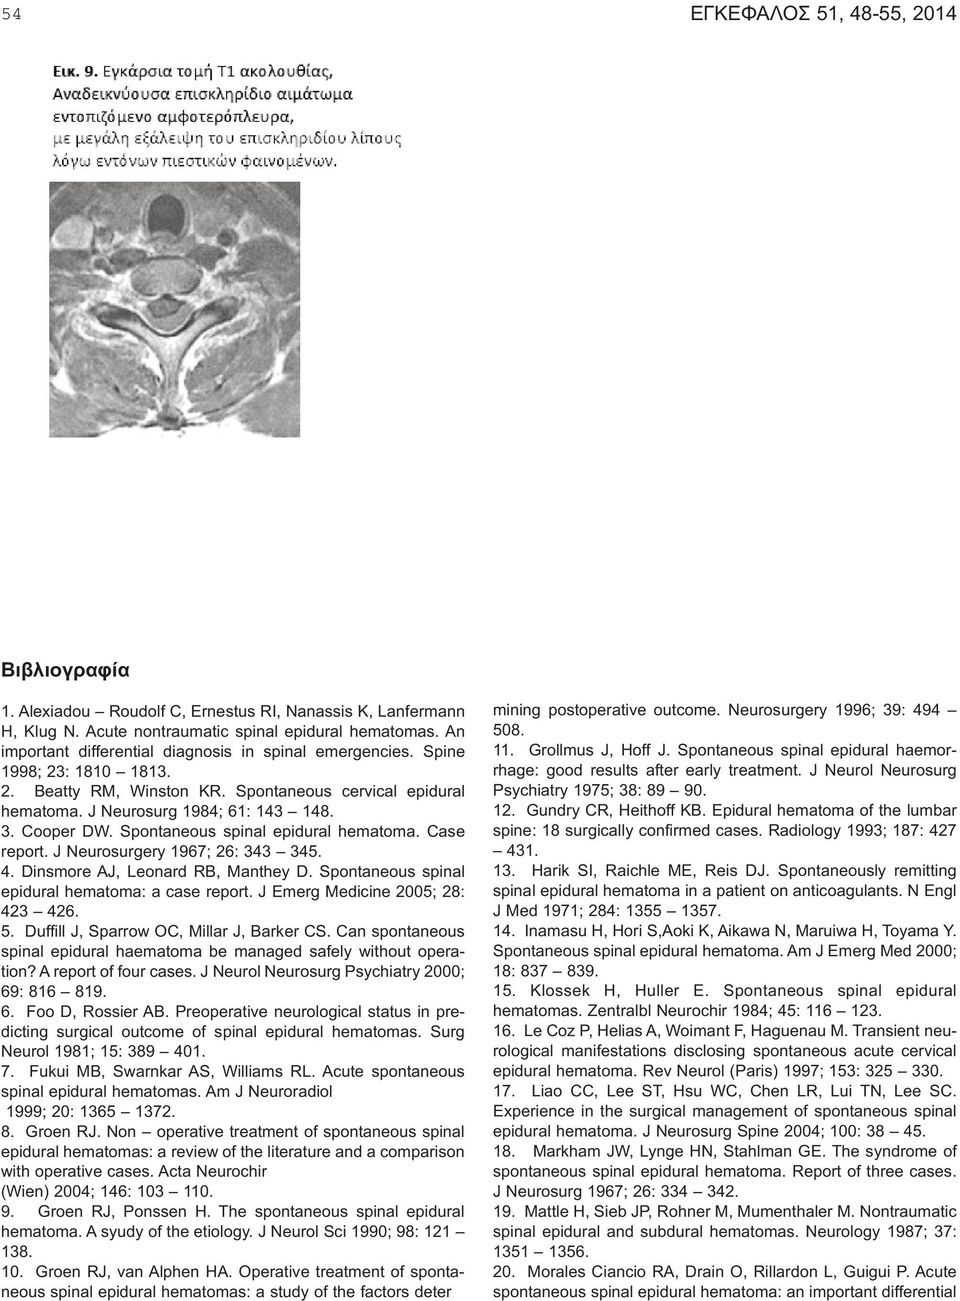 Spontaneous spinal epidural hematoma. Case report. J Neurosurgery 1967; 26: 343 345. 4. Dinsmore AJ, Leonard RB, Manthey D. Spontaneous spinal epidural hematoma: a case report.